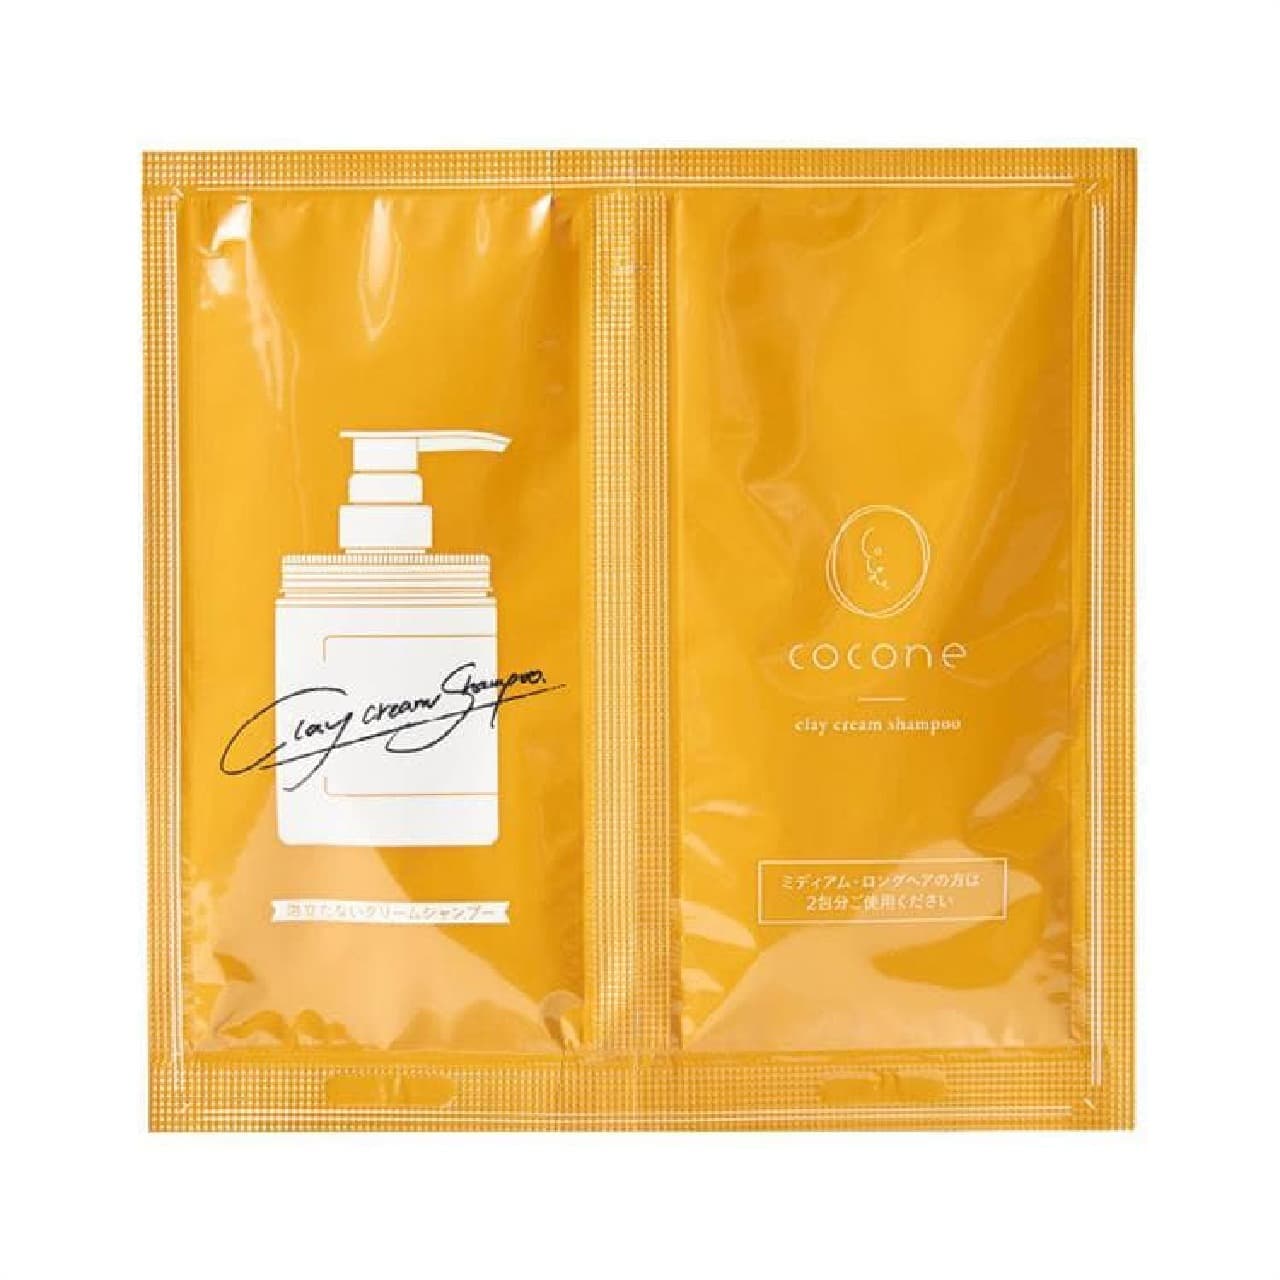 cocone clay cream shampoo trial 2 doses